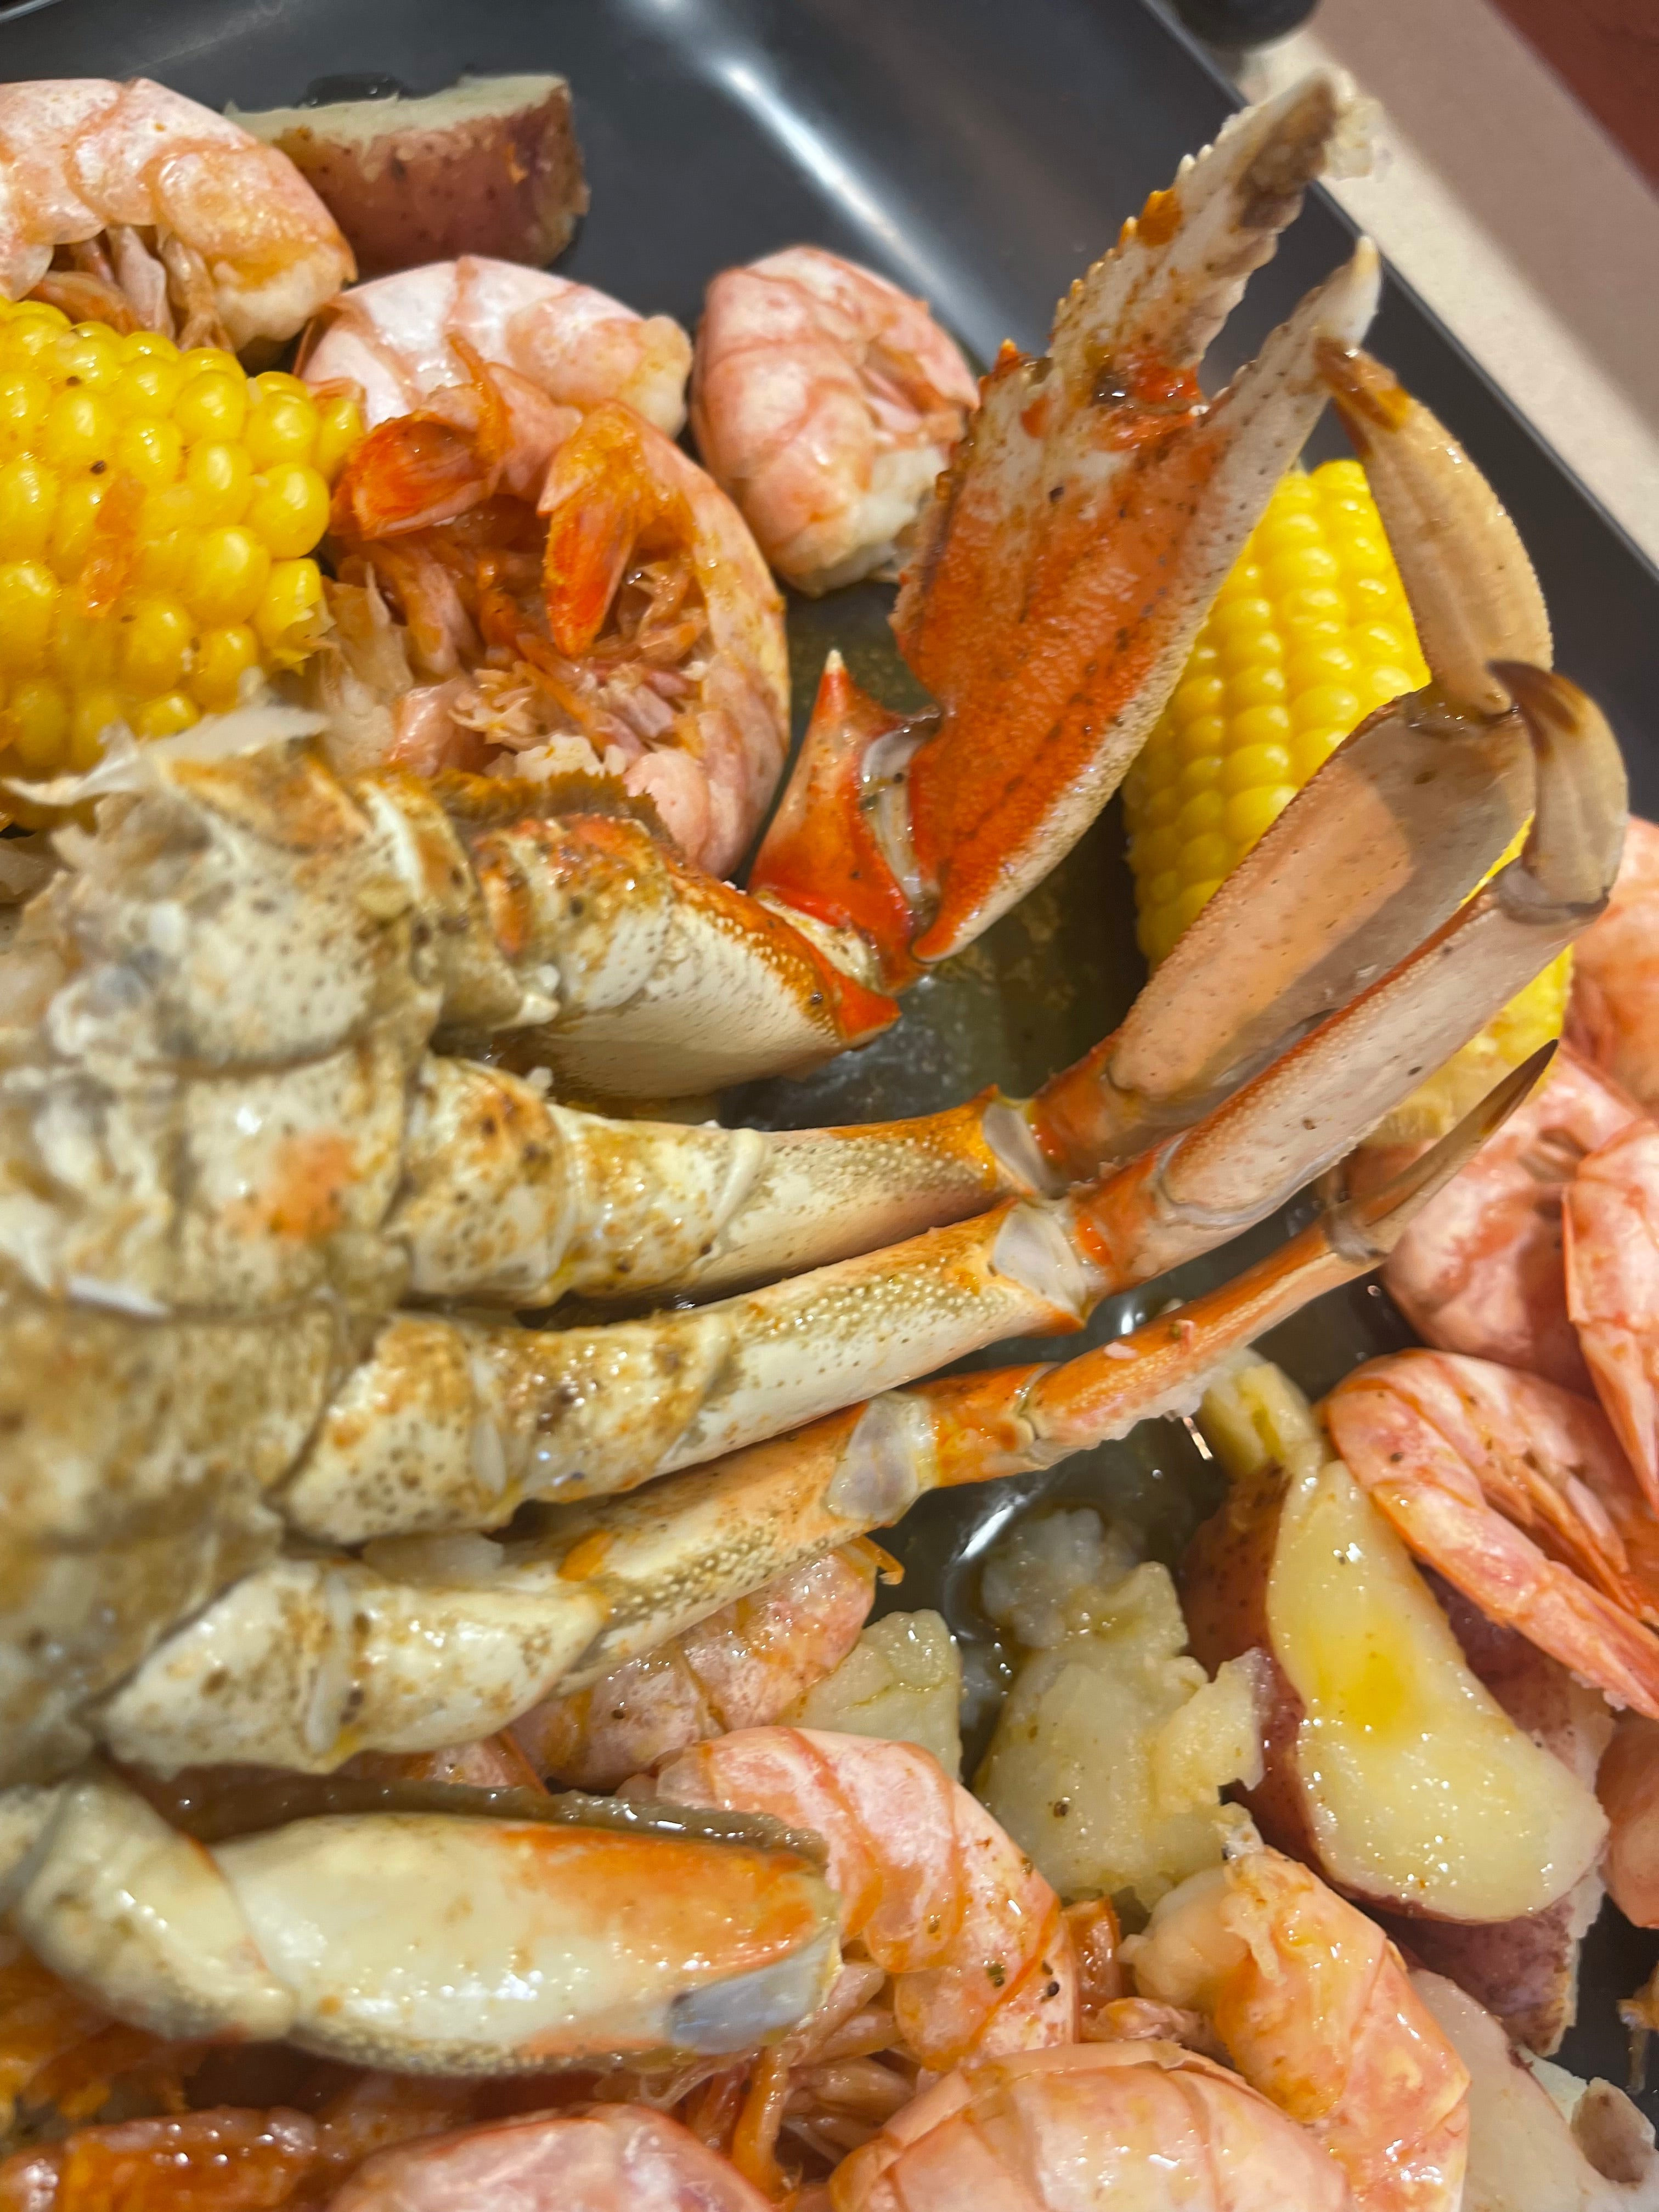 Rock Your Boat - 4-5 Person Seafood Boil Kit (Crab & Shrimp)